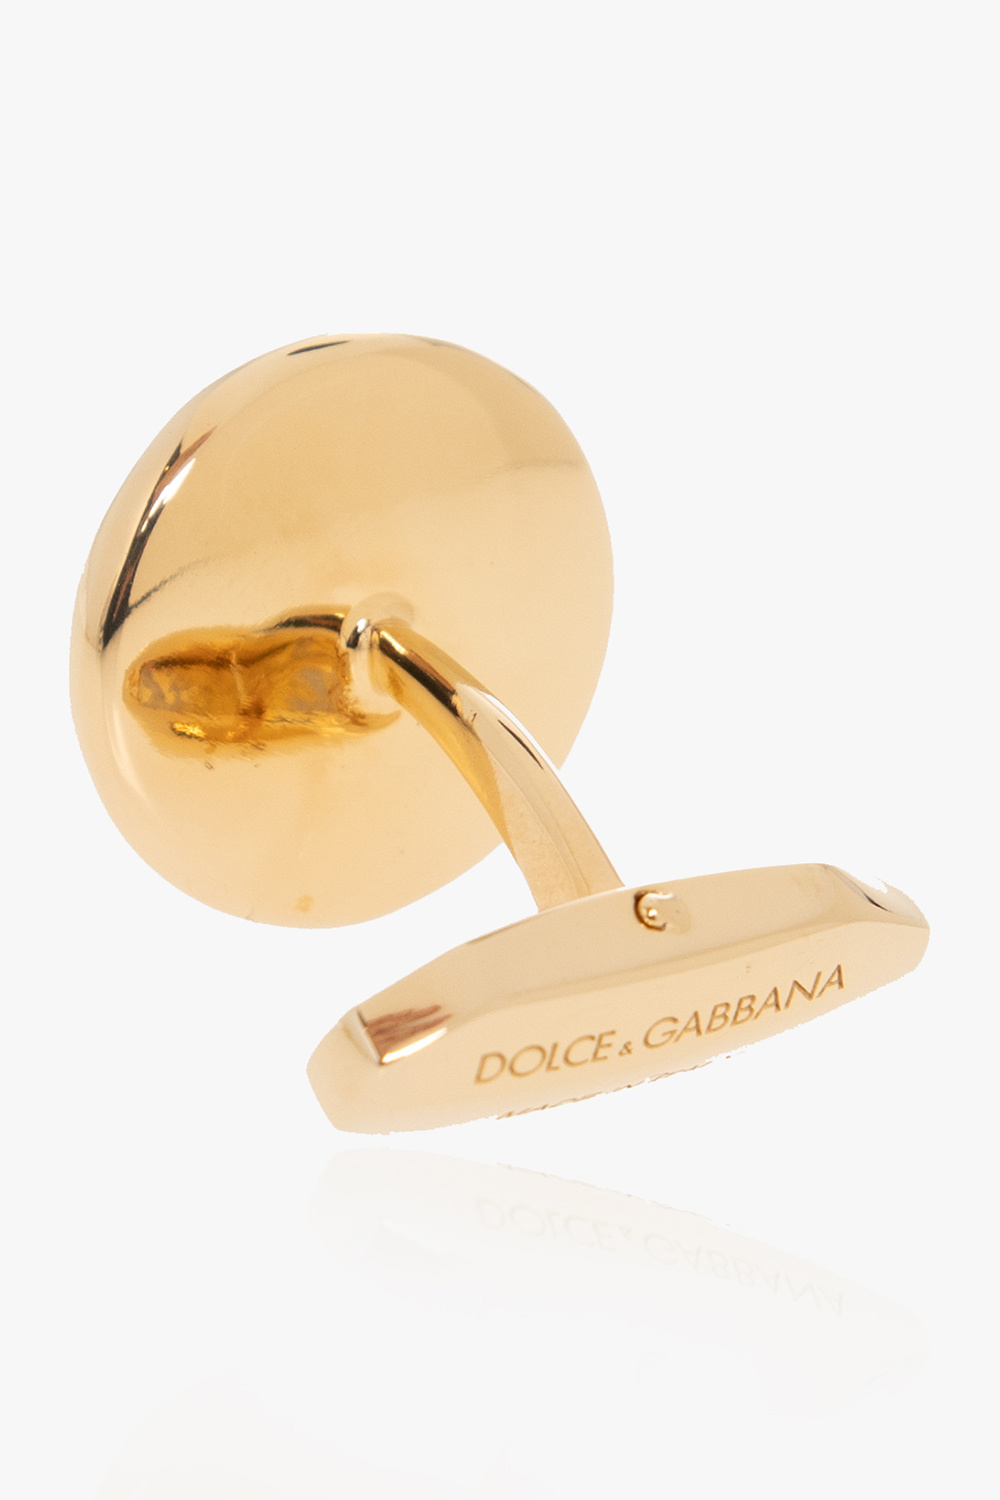 Dolce & Gabbana CROPPED dolce gabbana dg logo cotton socks item